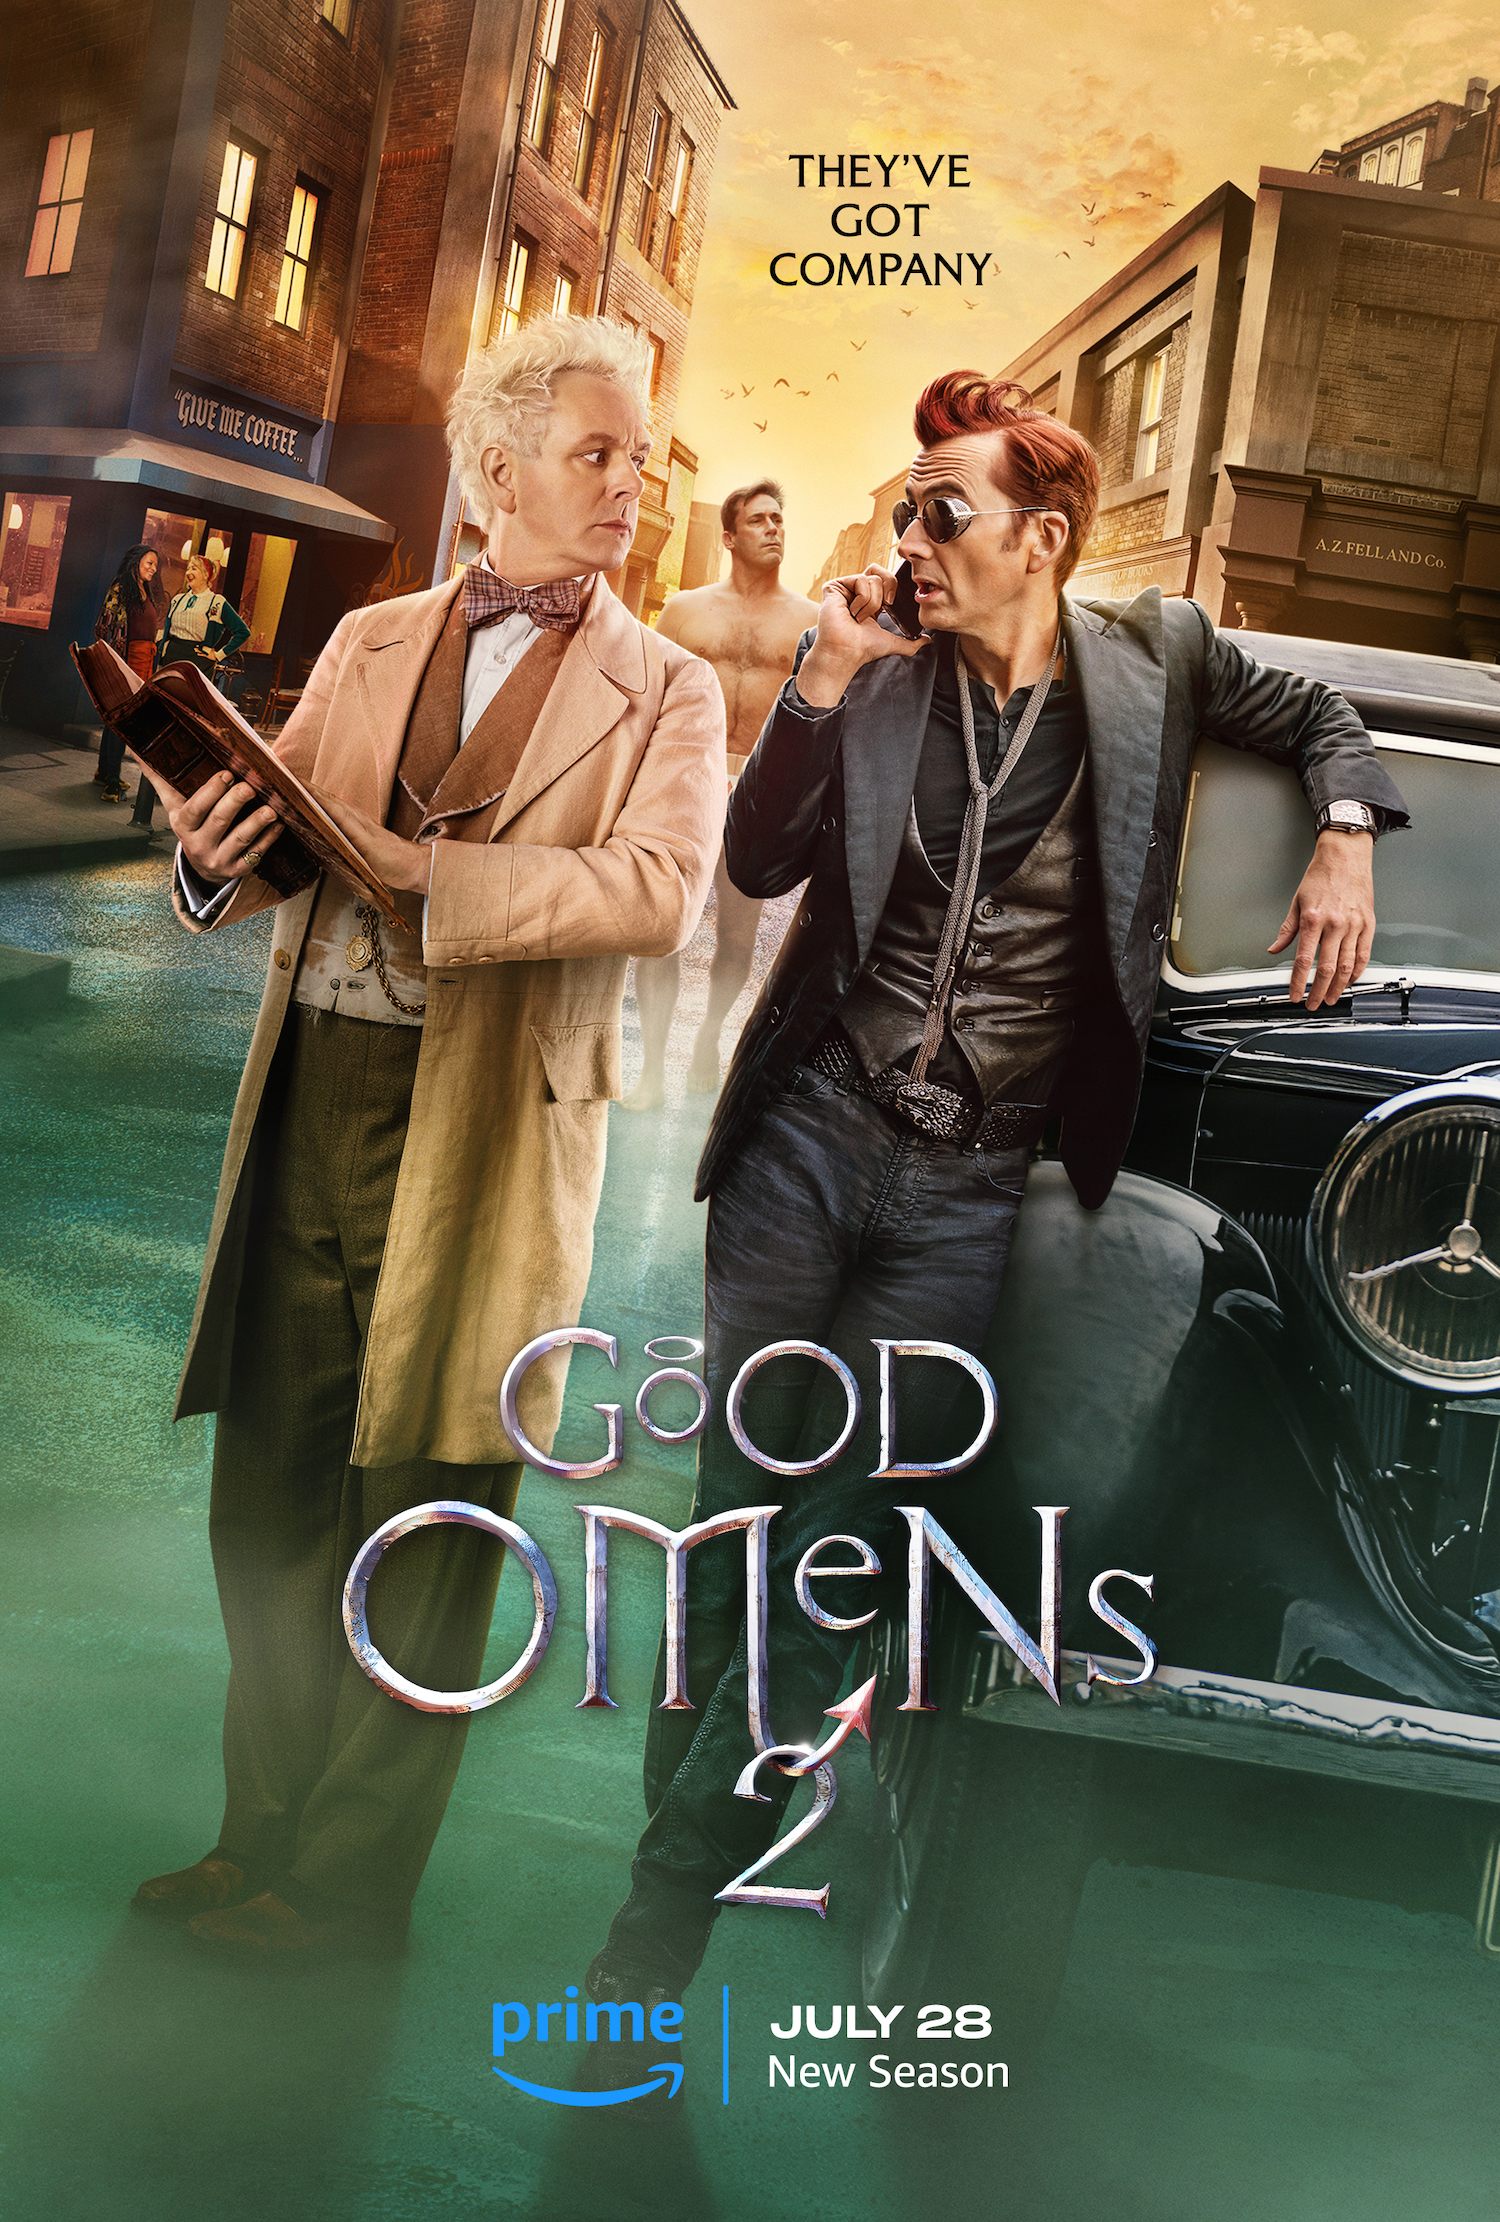 Michael Sheen, Jon Hamm, and David Tennant in 'Good Omens' Season 2 poster